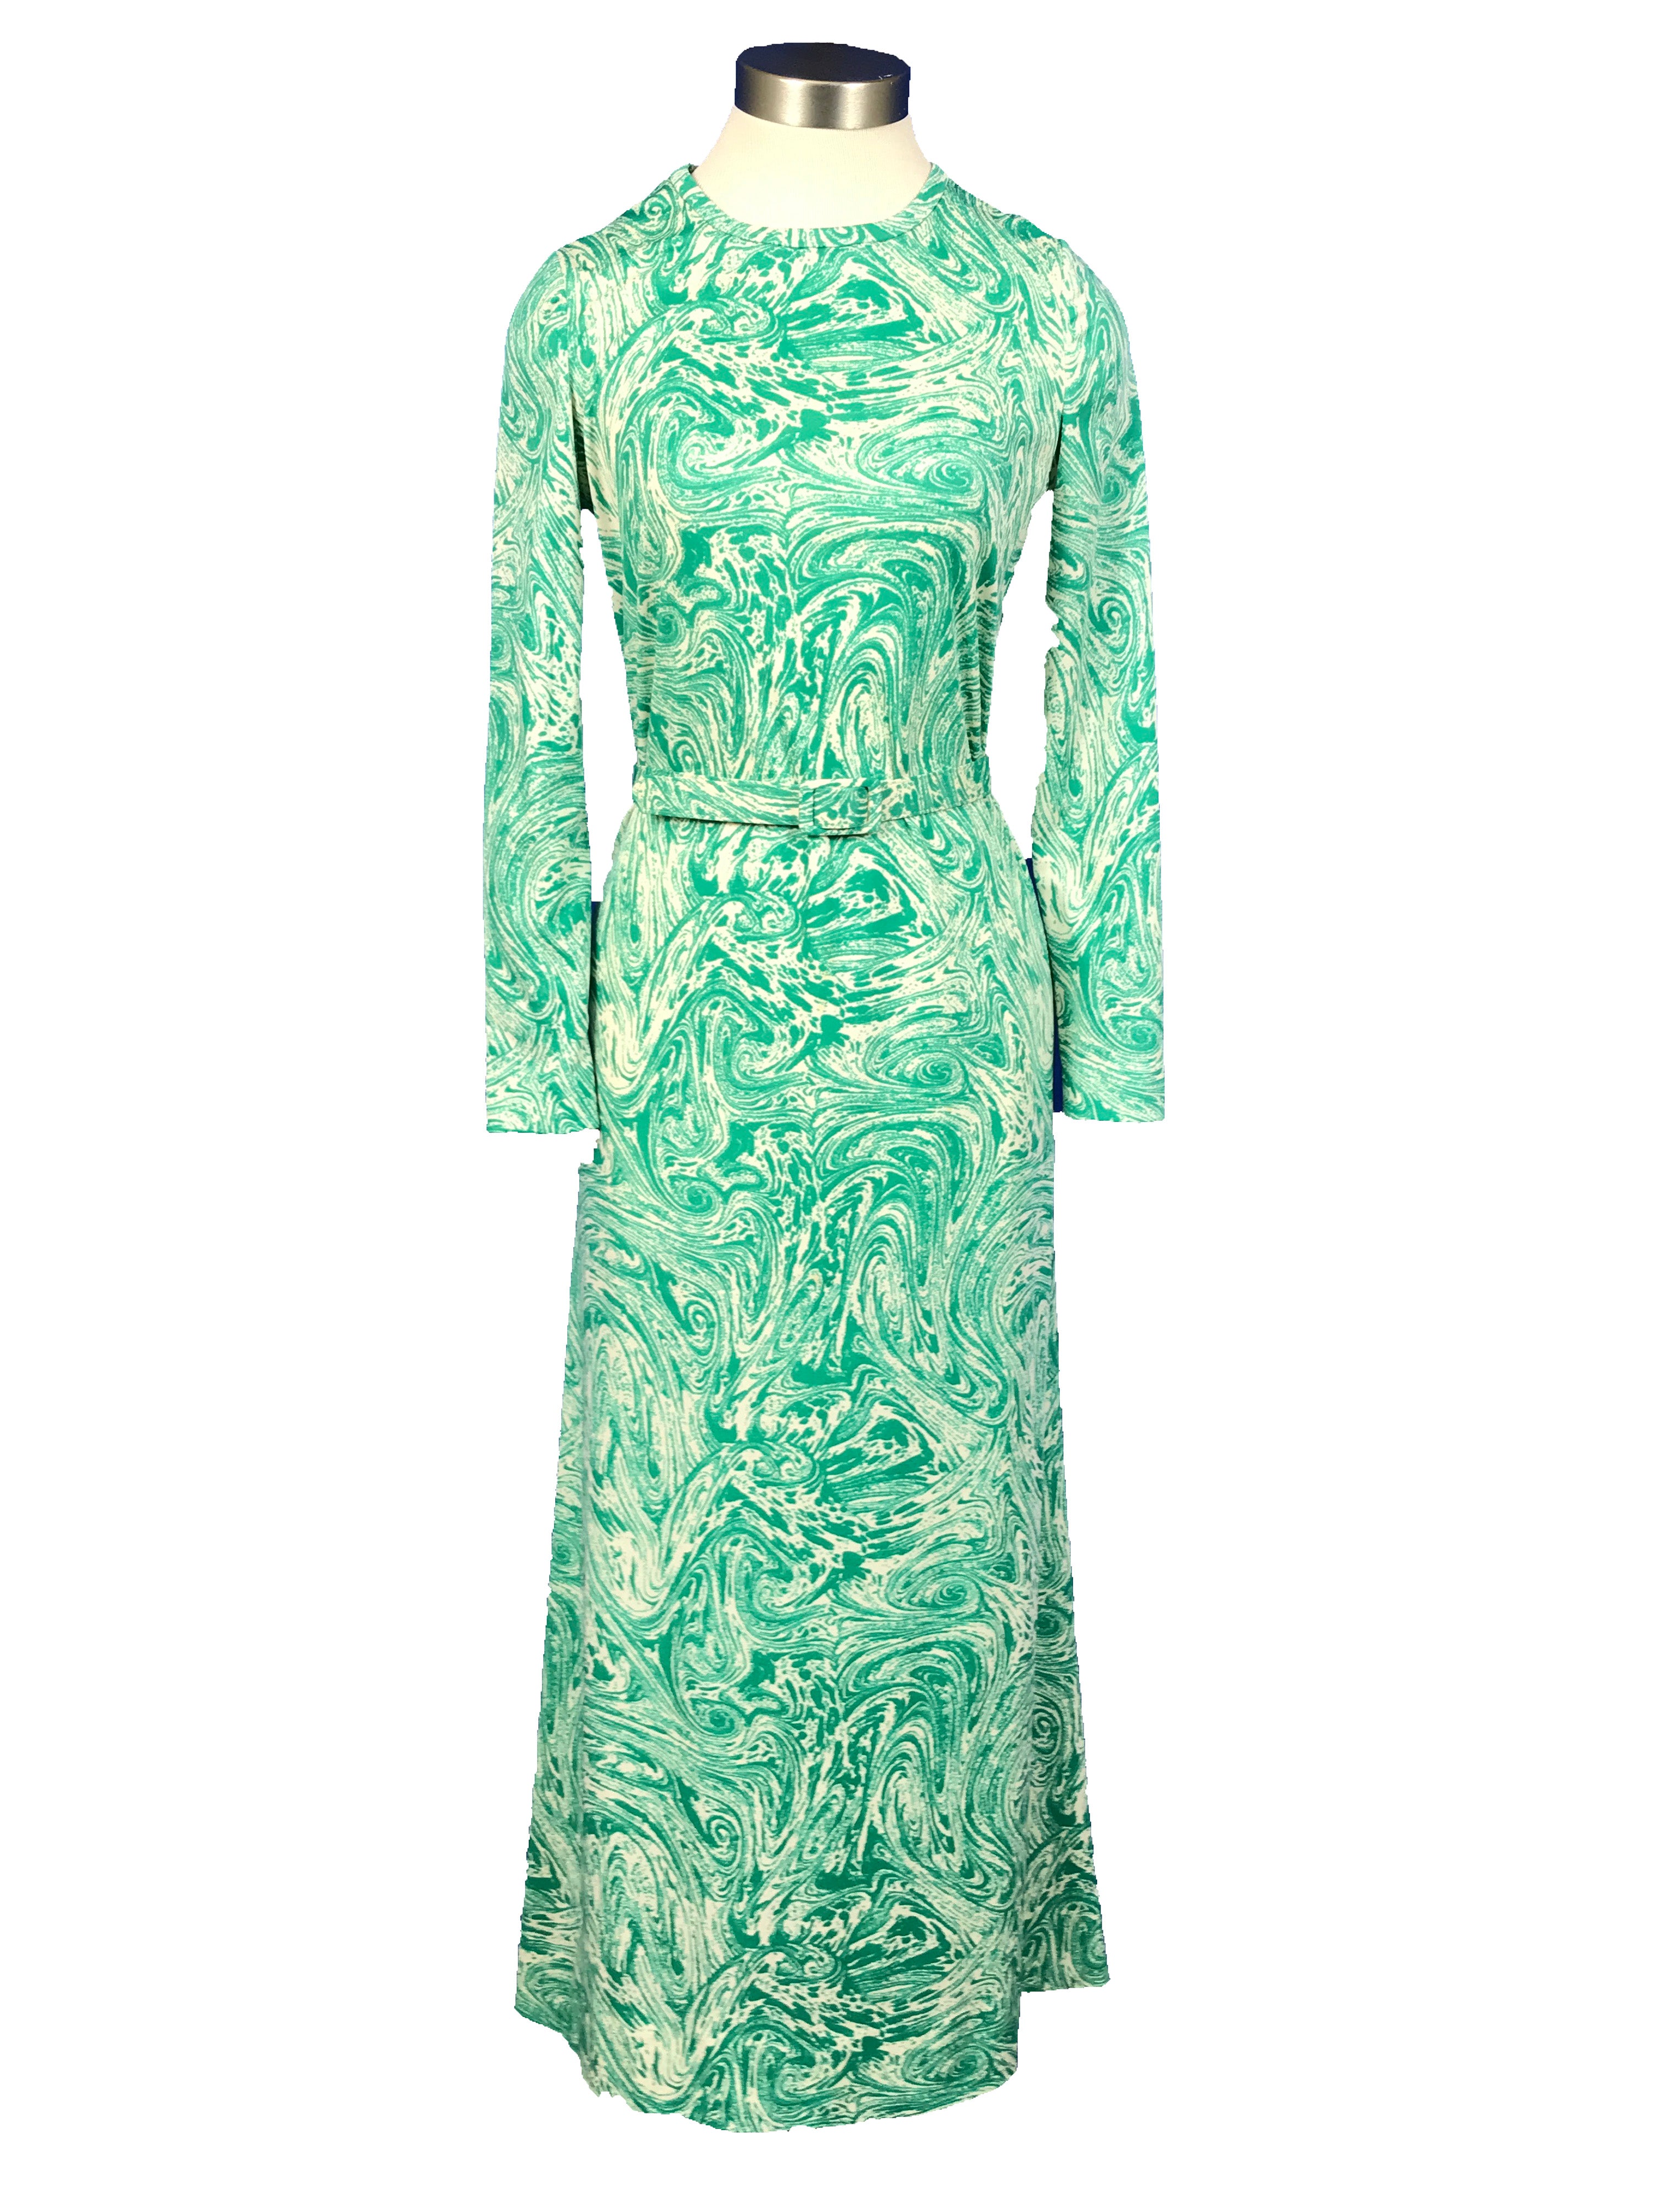 Vintage Tanner Floor Length Green Patterned Dress Women's Size 12